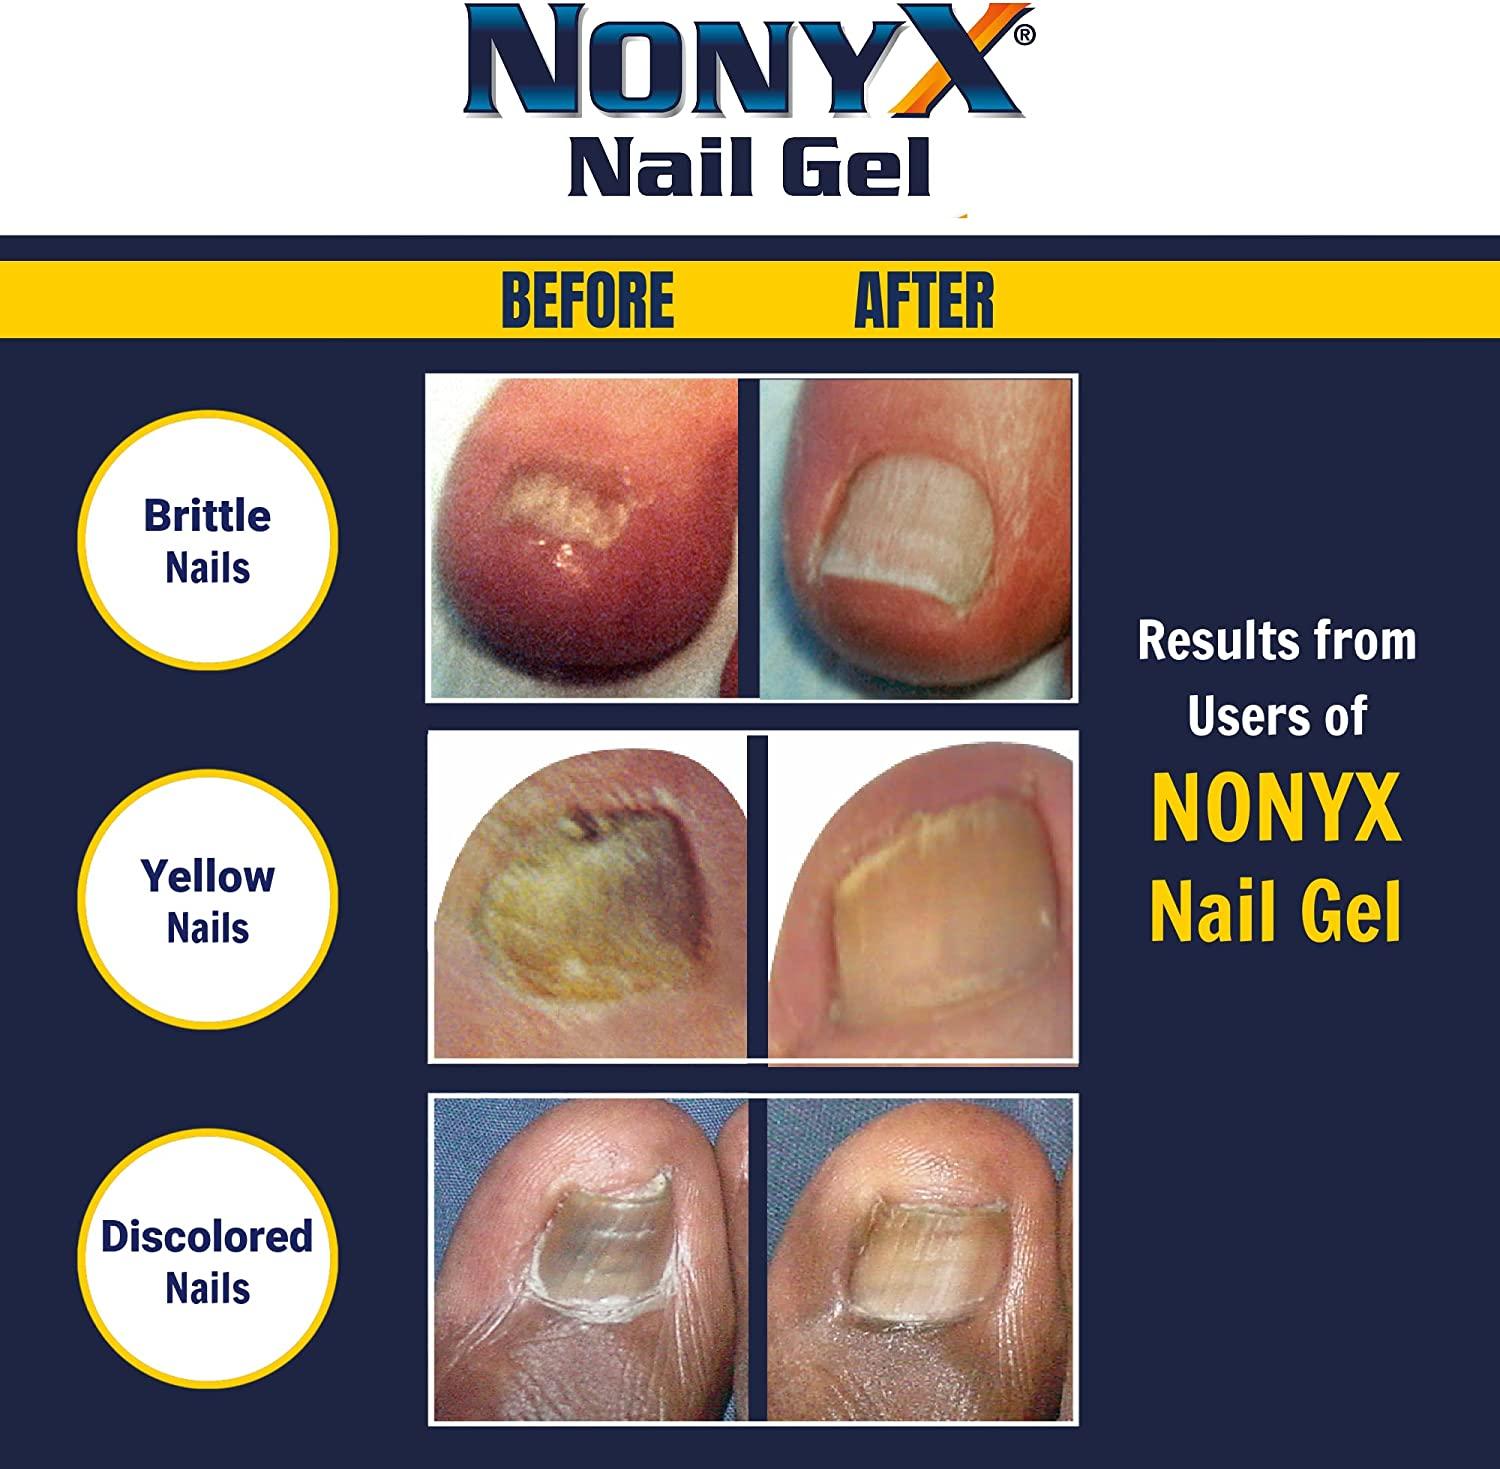 Does Nonyx Nail Gel Kill Fungus